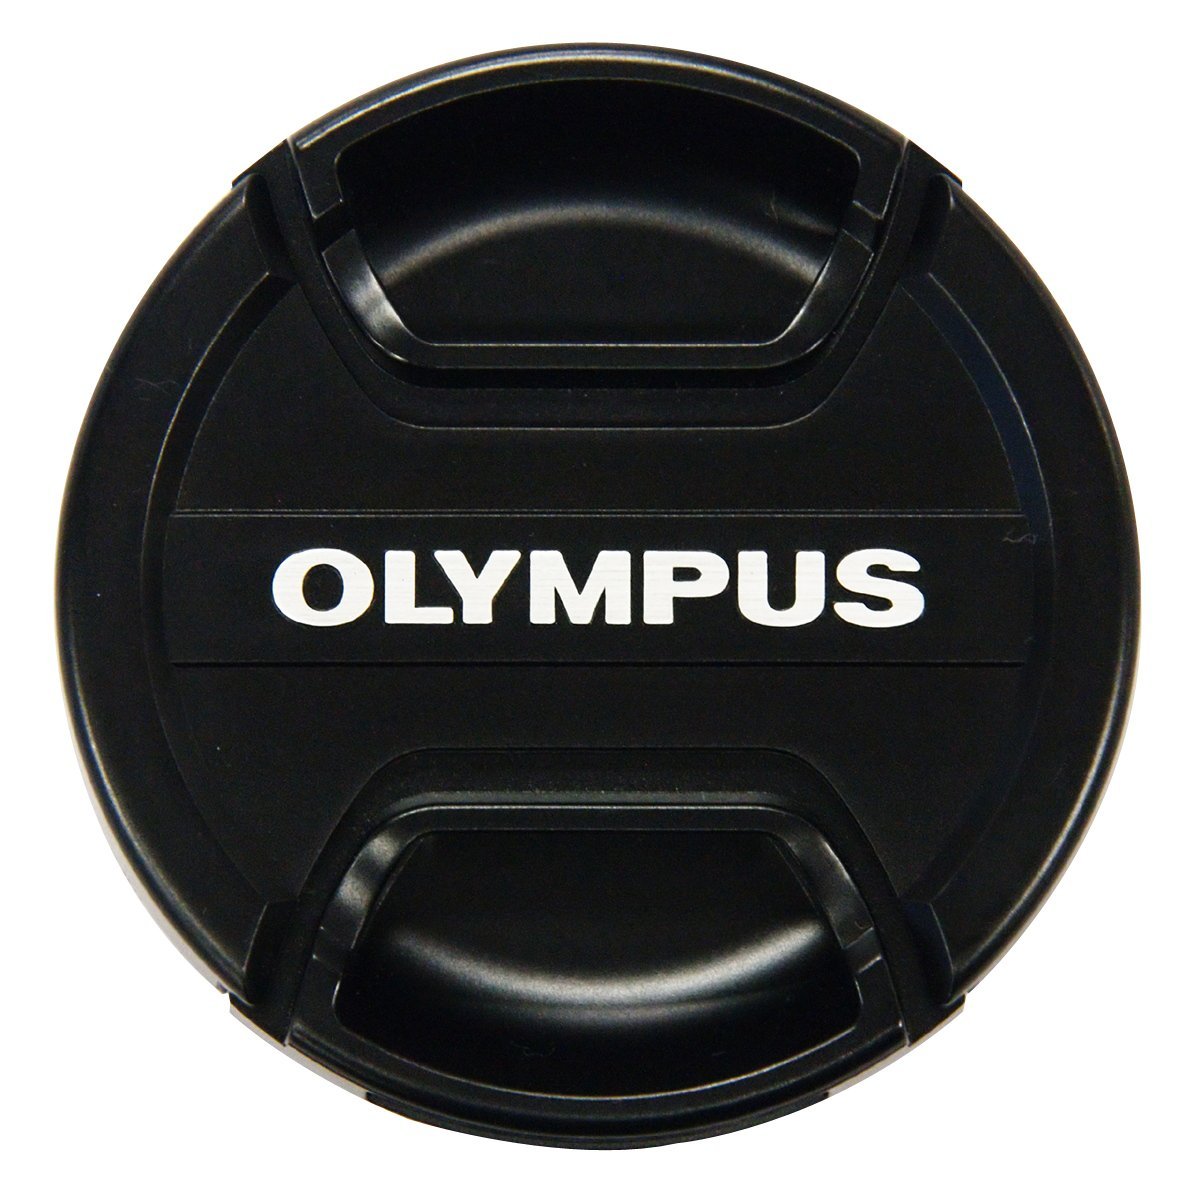 Cap trước lens Olympus